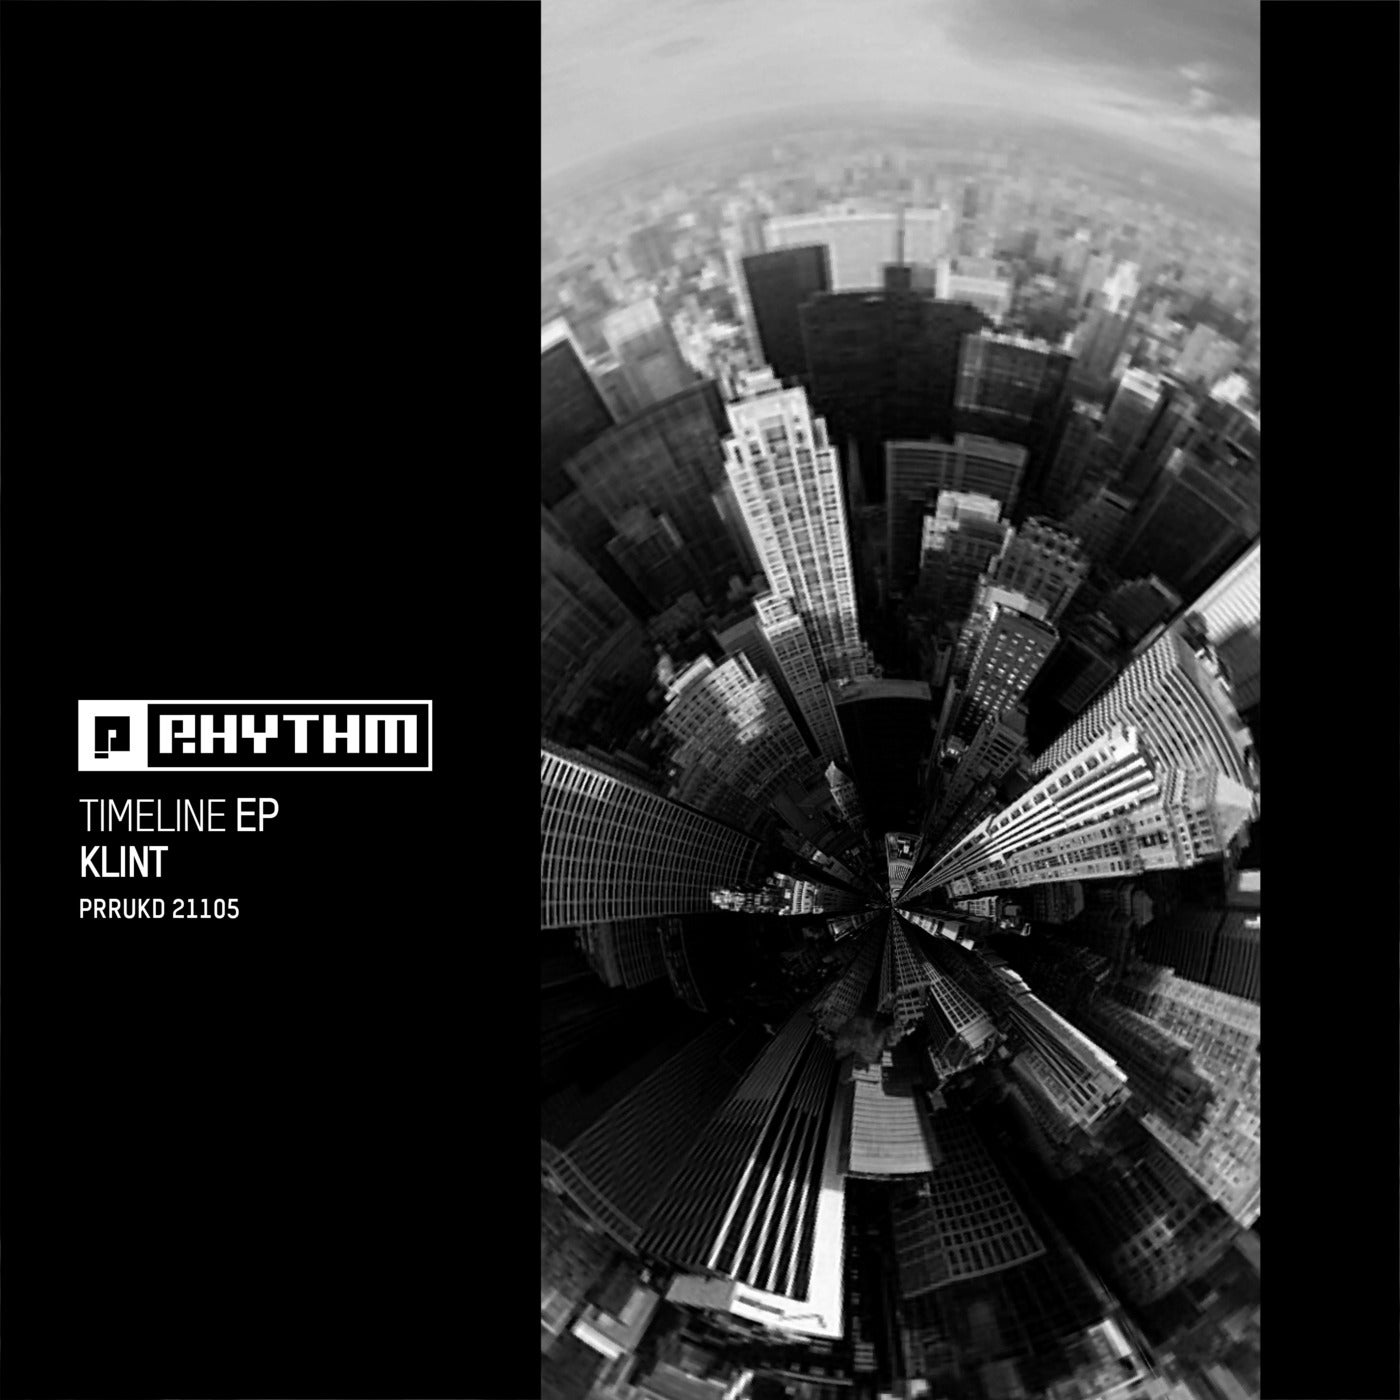 Klint – Timeline EP [PRRUKD21105]